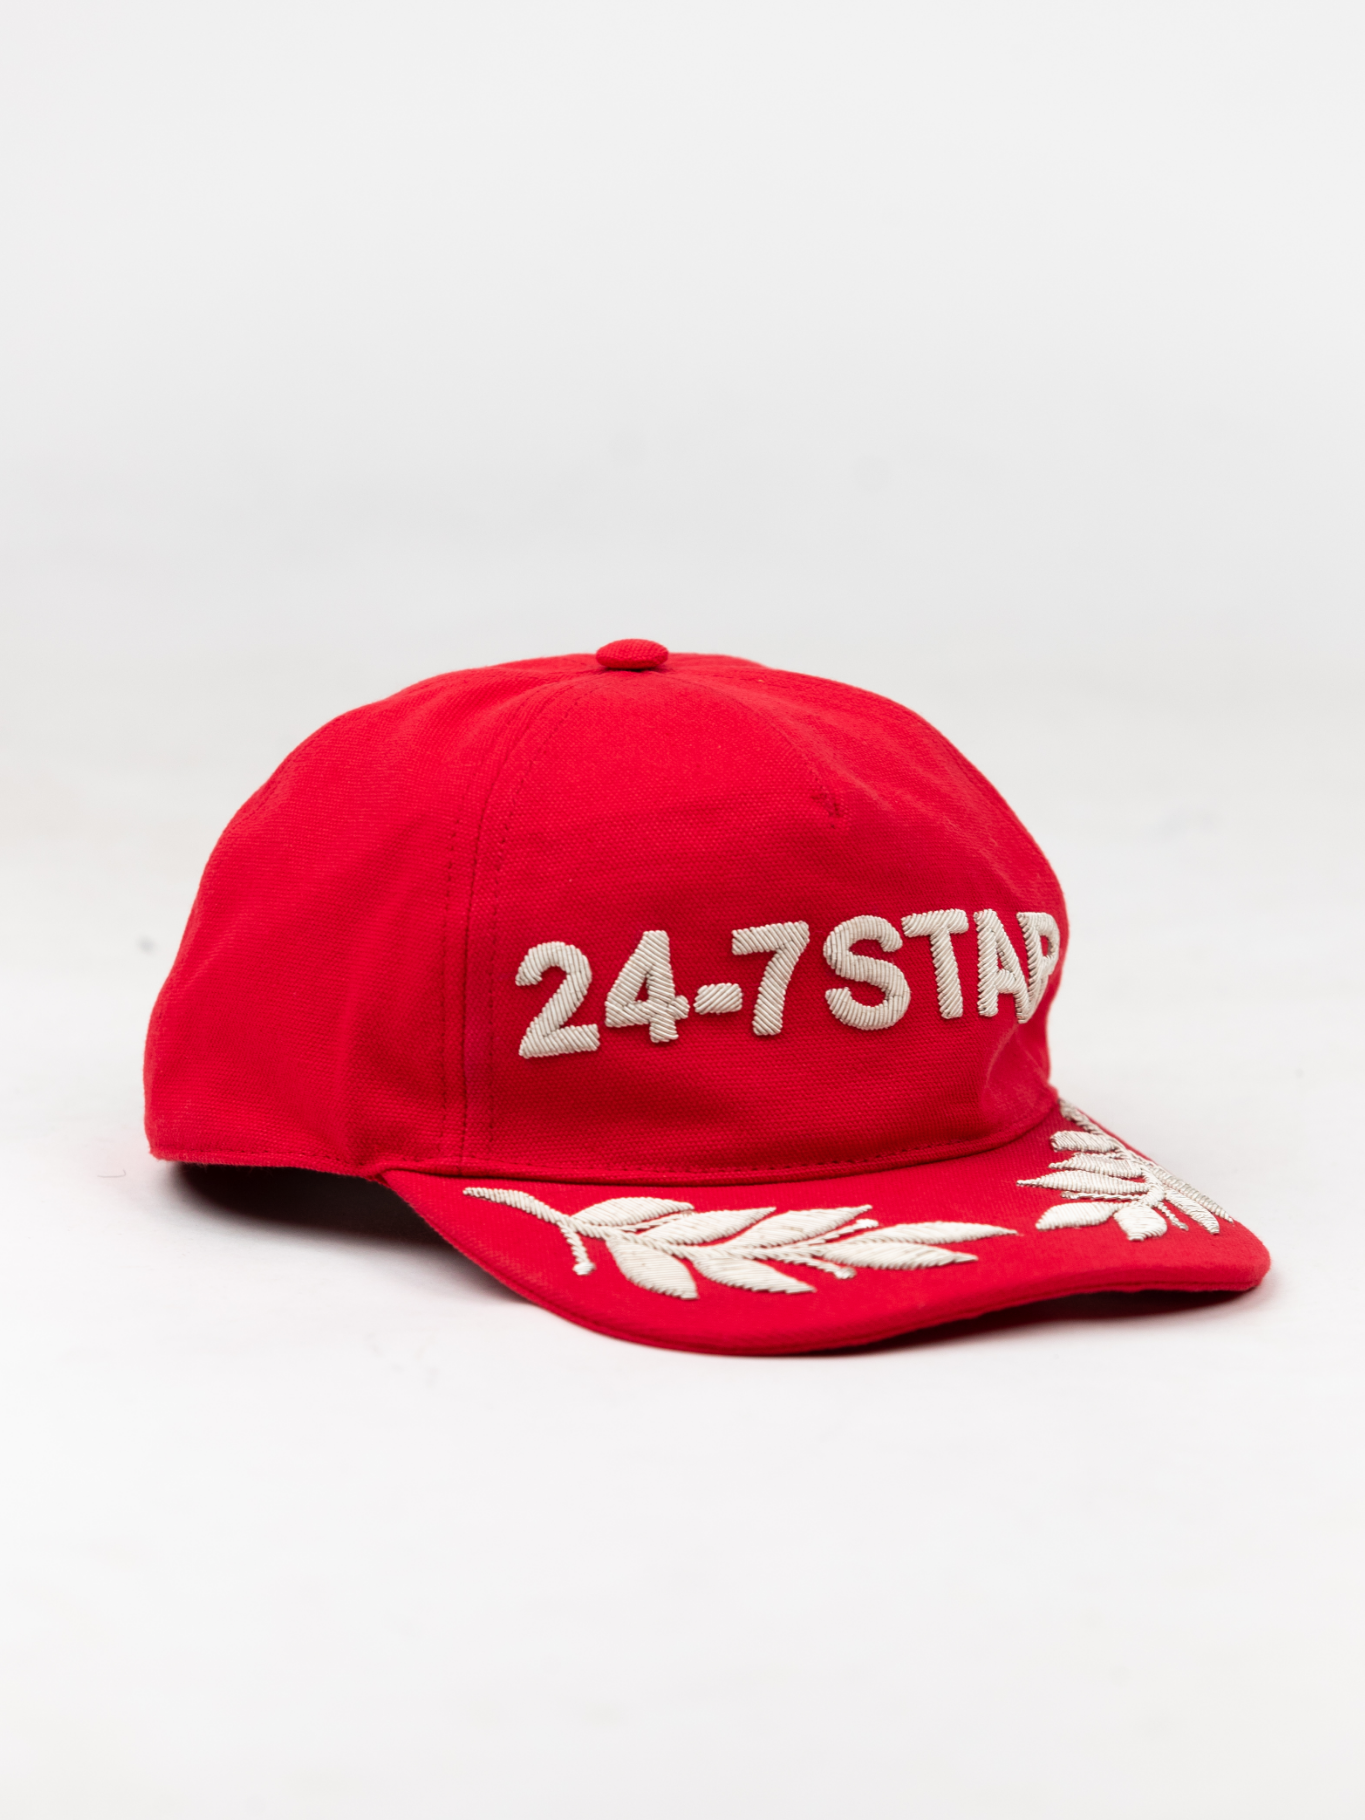 Red 24-7 Star Baseball Cap